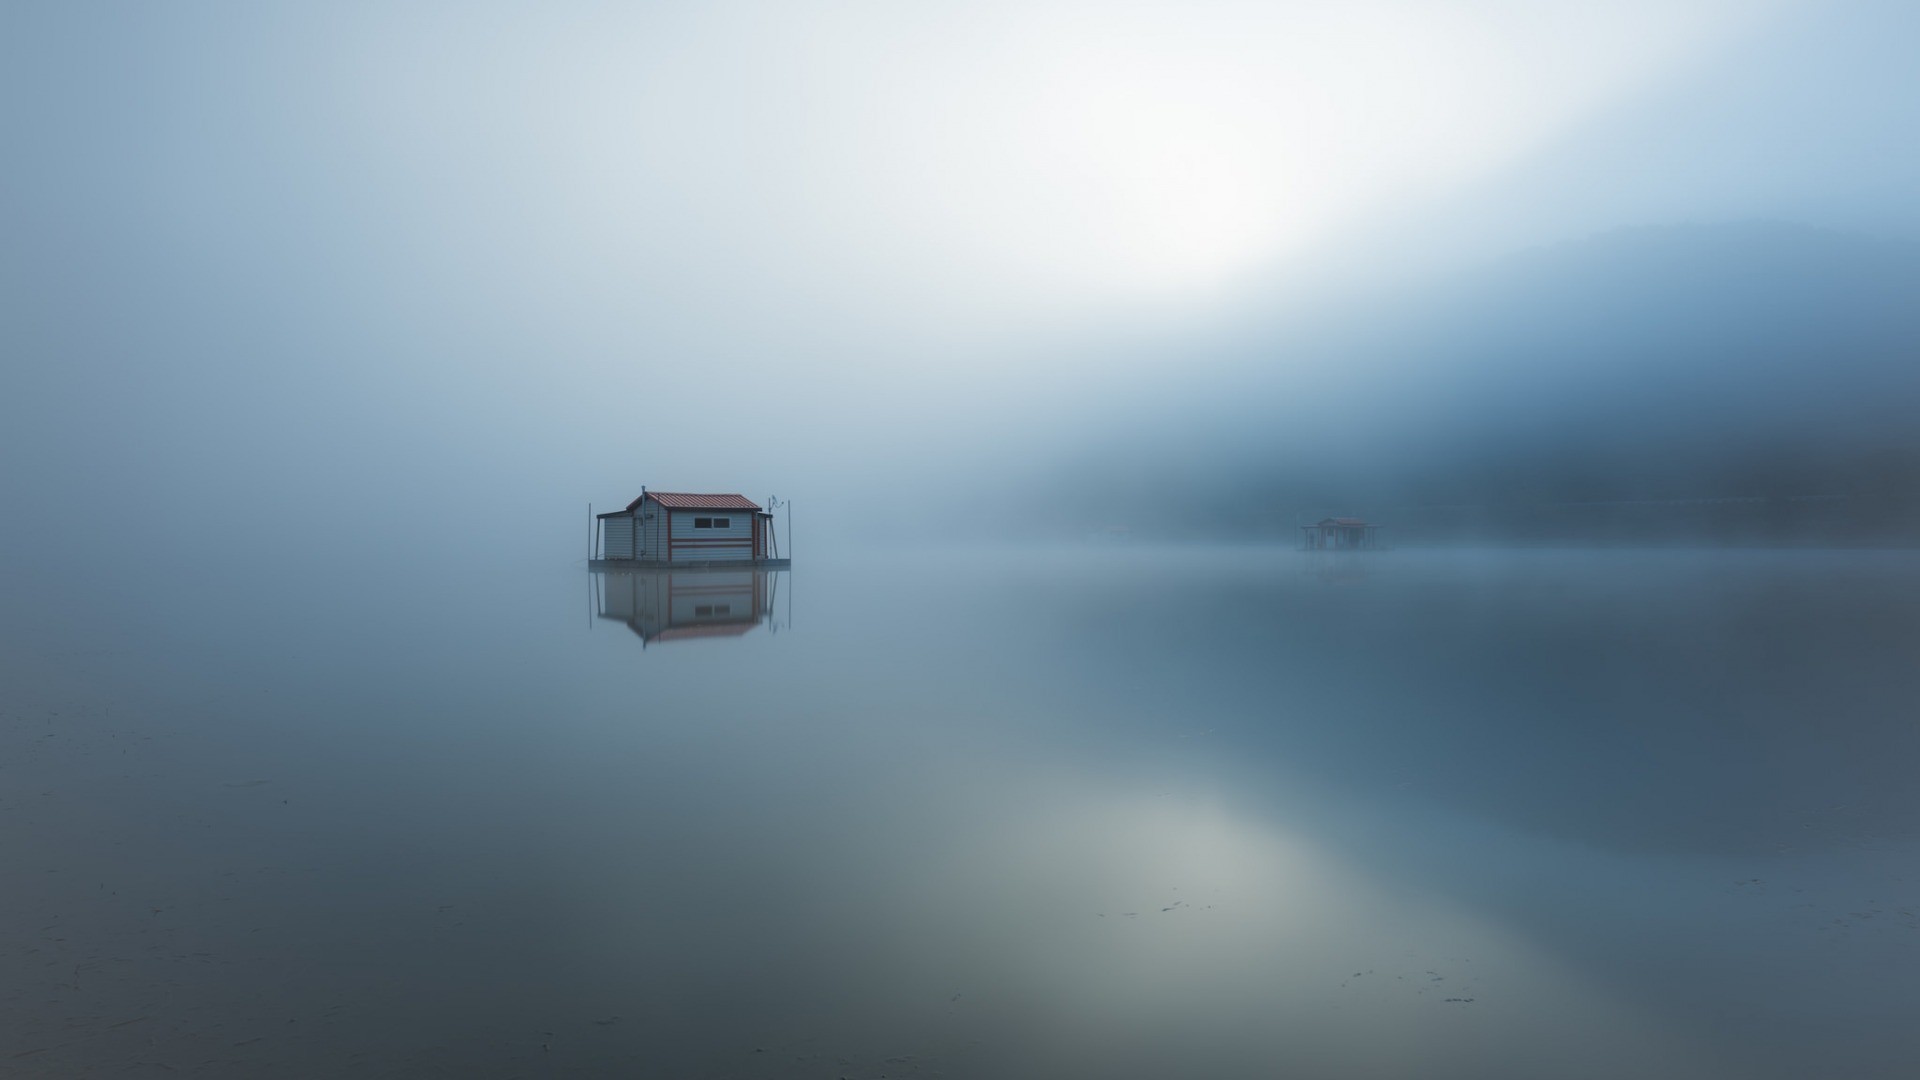 General 1920x1080 nature landscape minimalism water mist long exposure blurred reflection horizon house hills